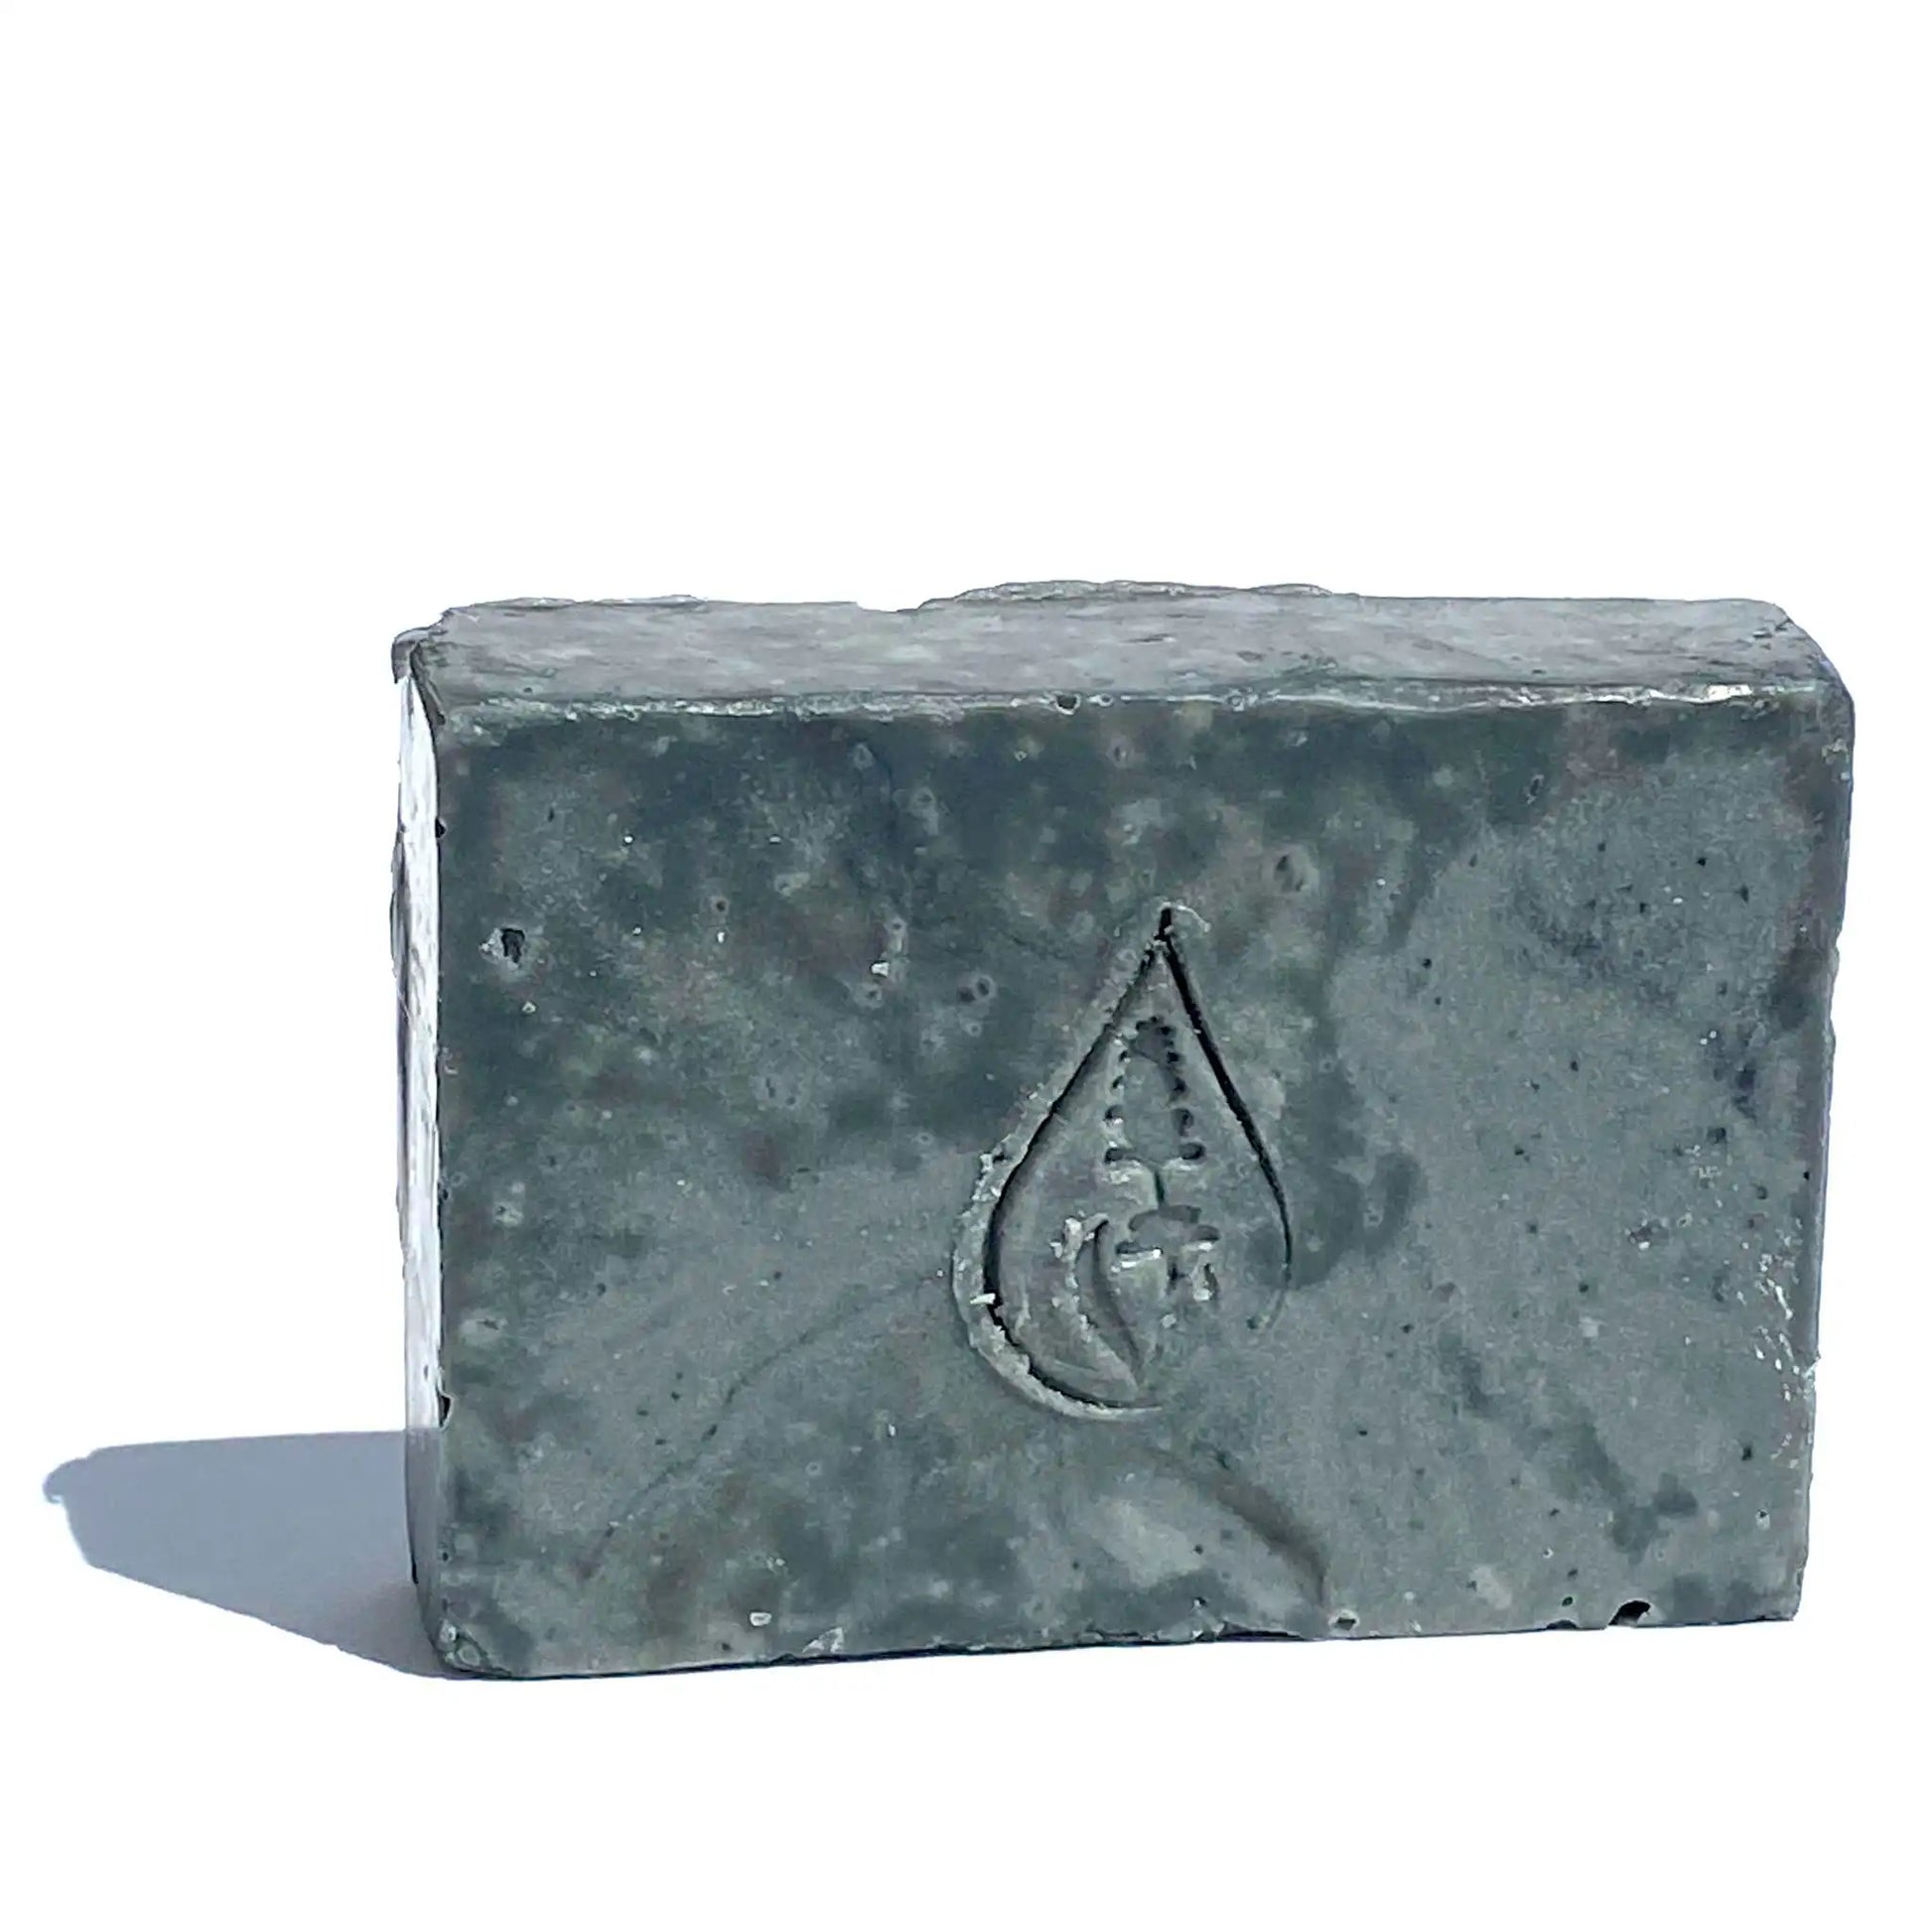 Kalliston, Detox Black Lava Soap - The Grindstone